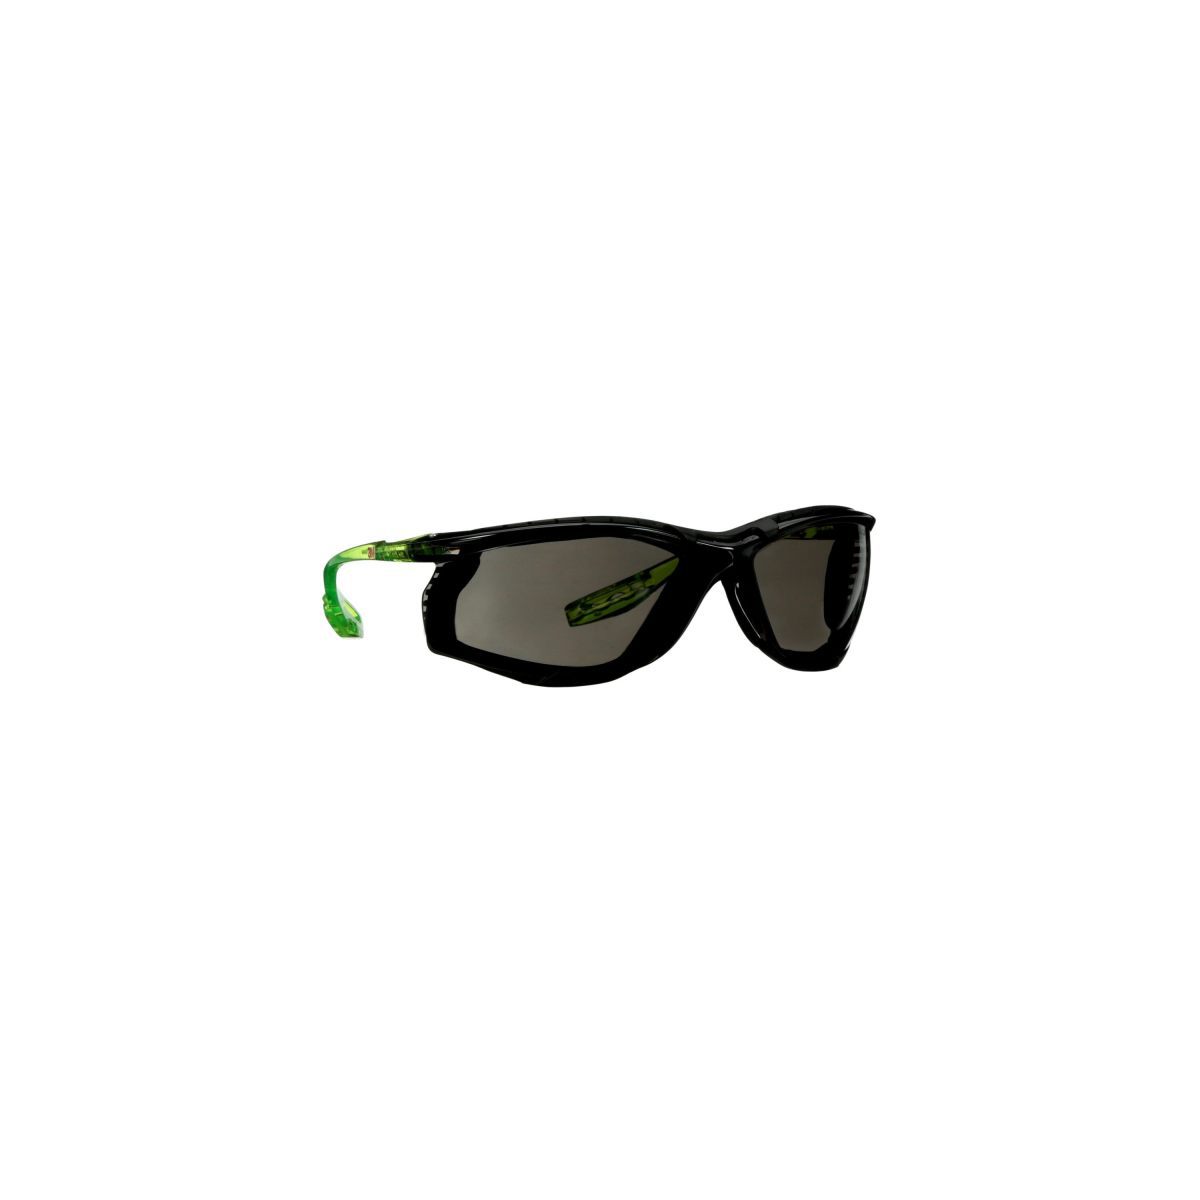 3M Sunglasses Safety Eyewear Black Anti-Fog Scratch-Resistant Lens Damaged Box 